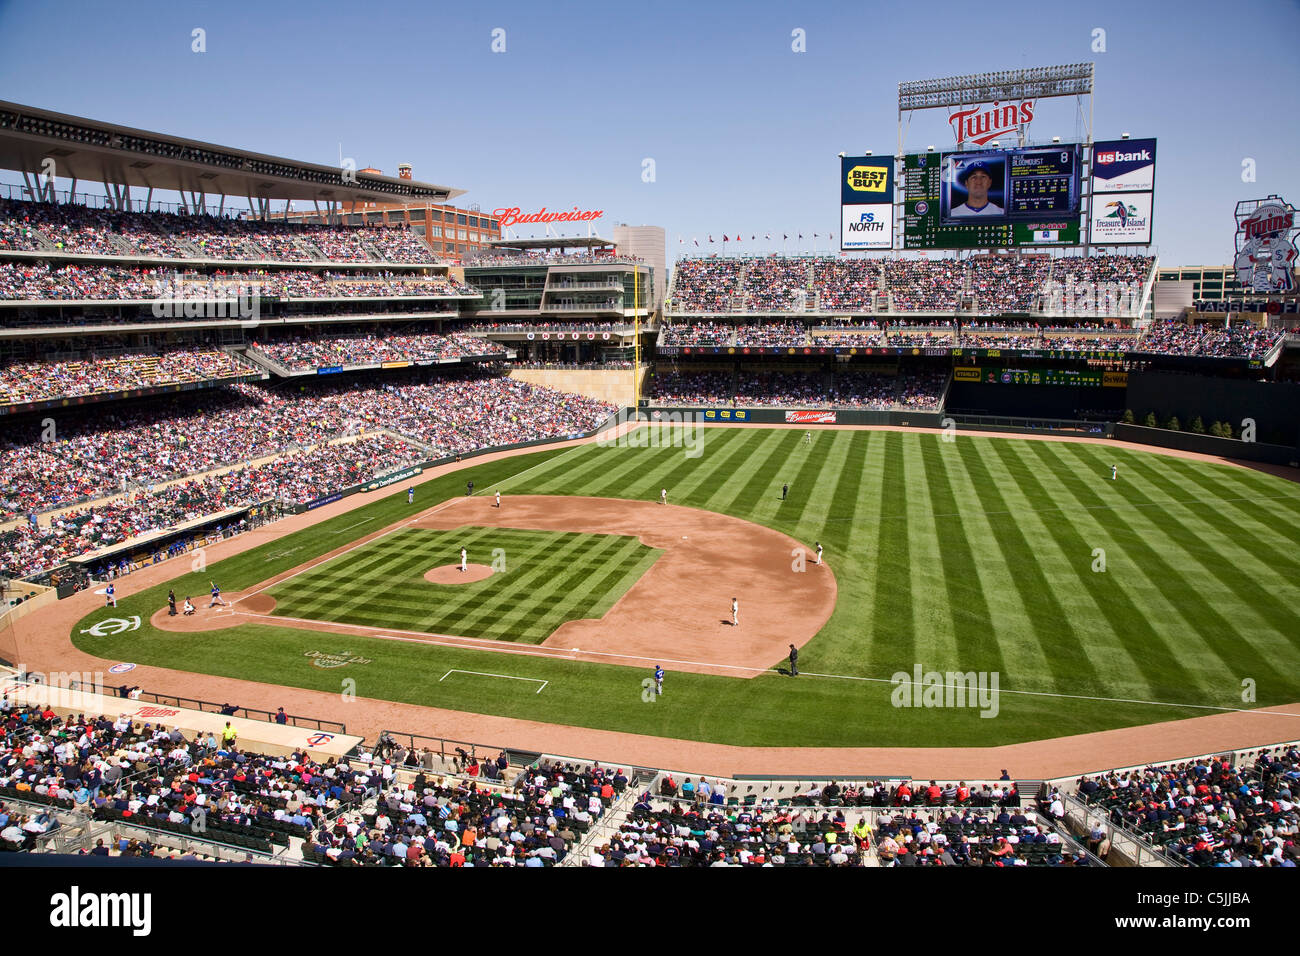 La major league baseball à champ Cible, Minneapolis, Minnesota Banque D'Images